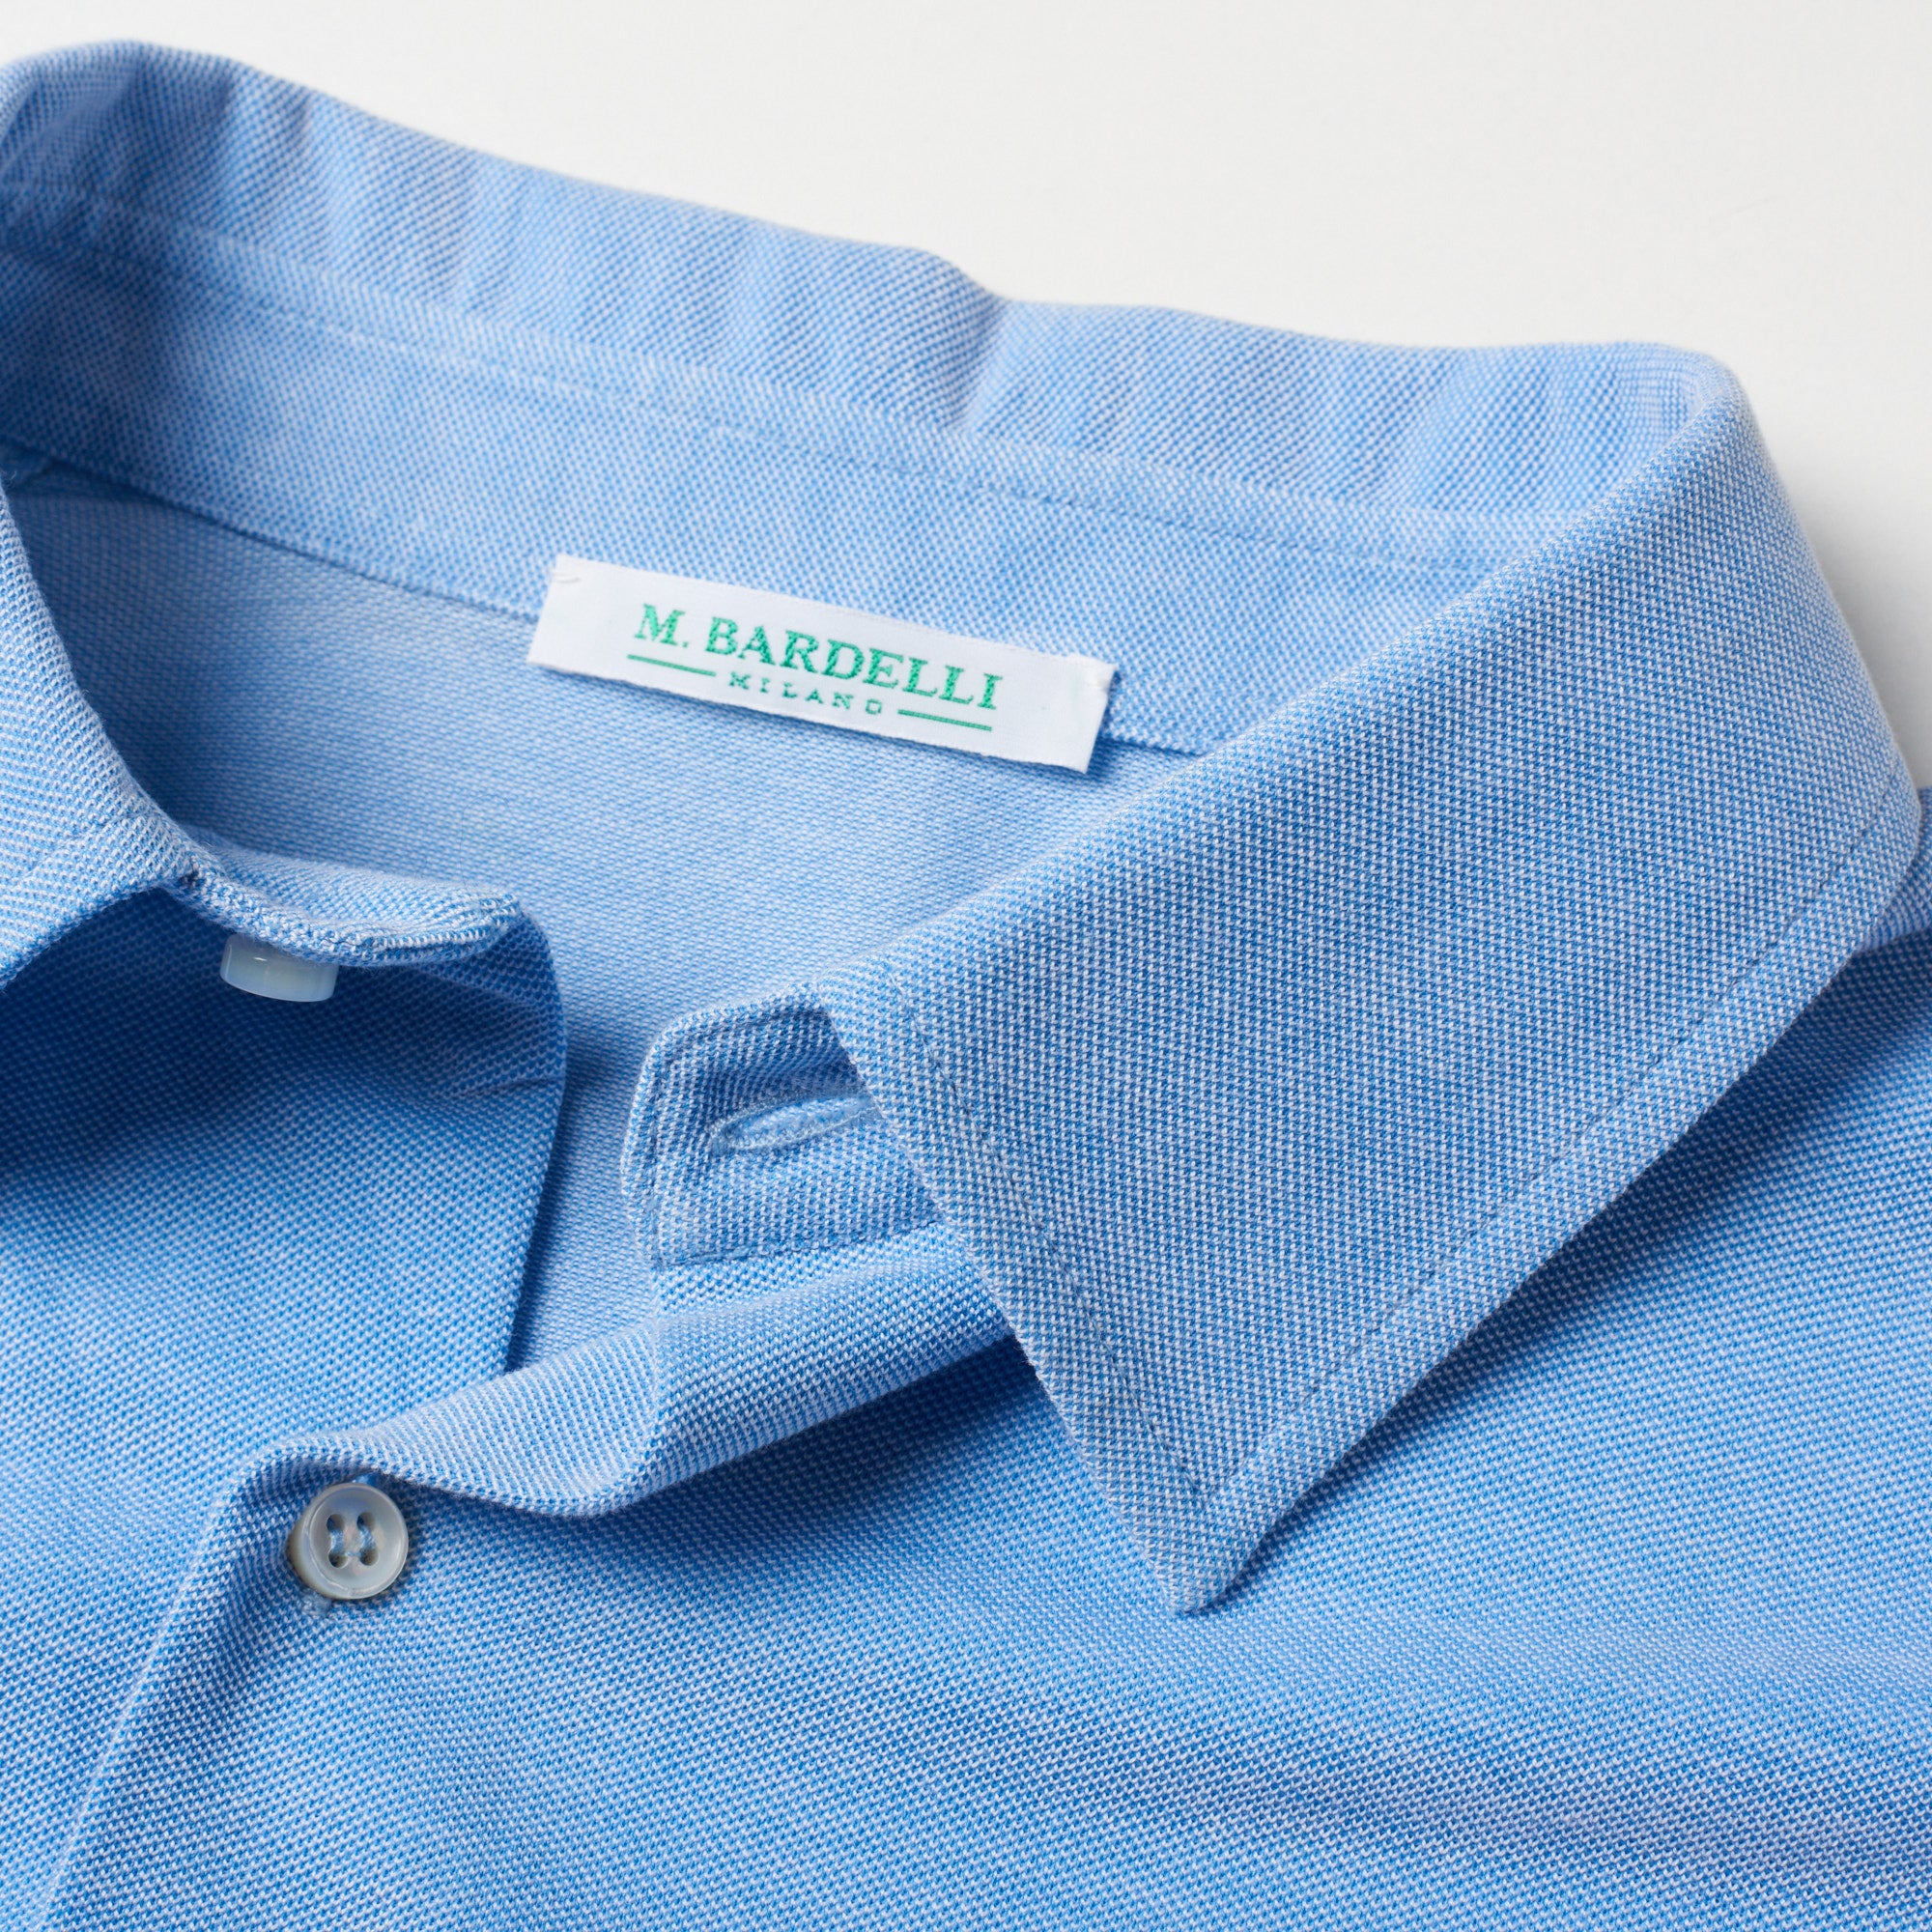 M.BARDELLI Milano Light Blue Oxford Cotton 1 Pocket Casual Shirt Size L M.BARDELLI